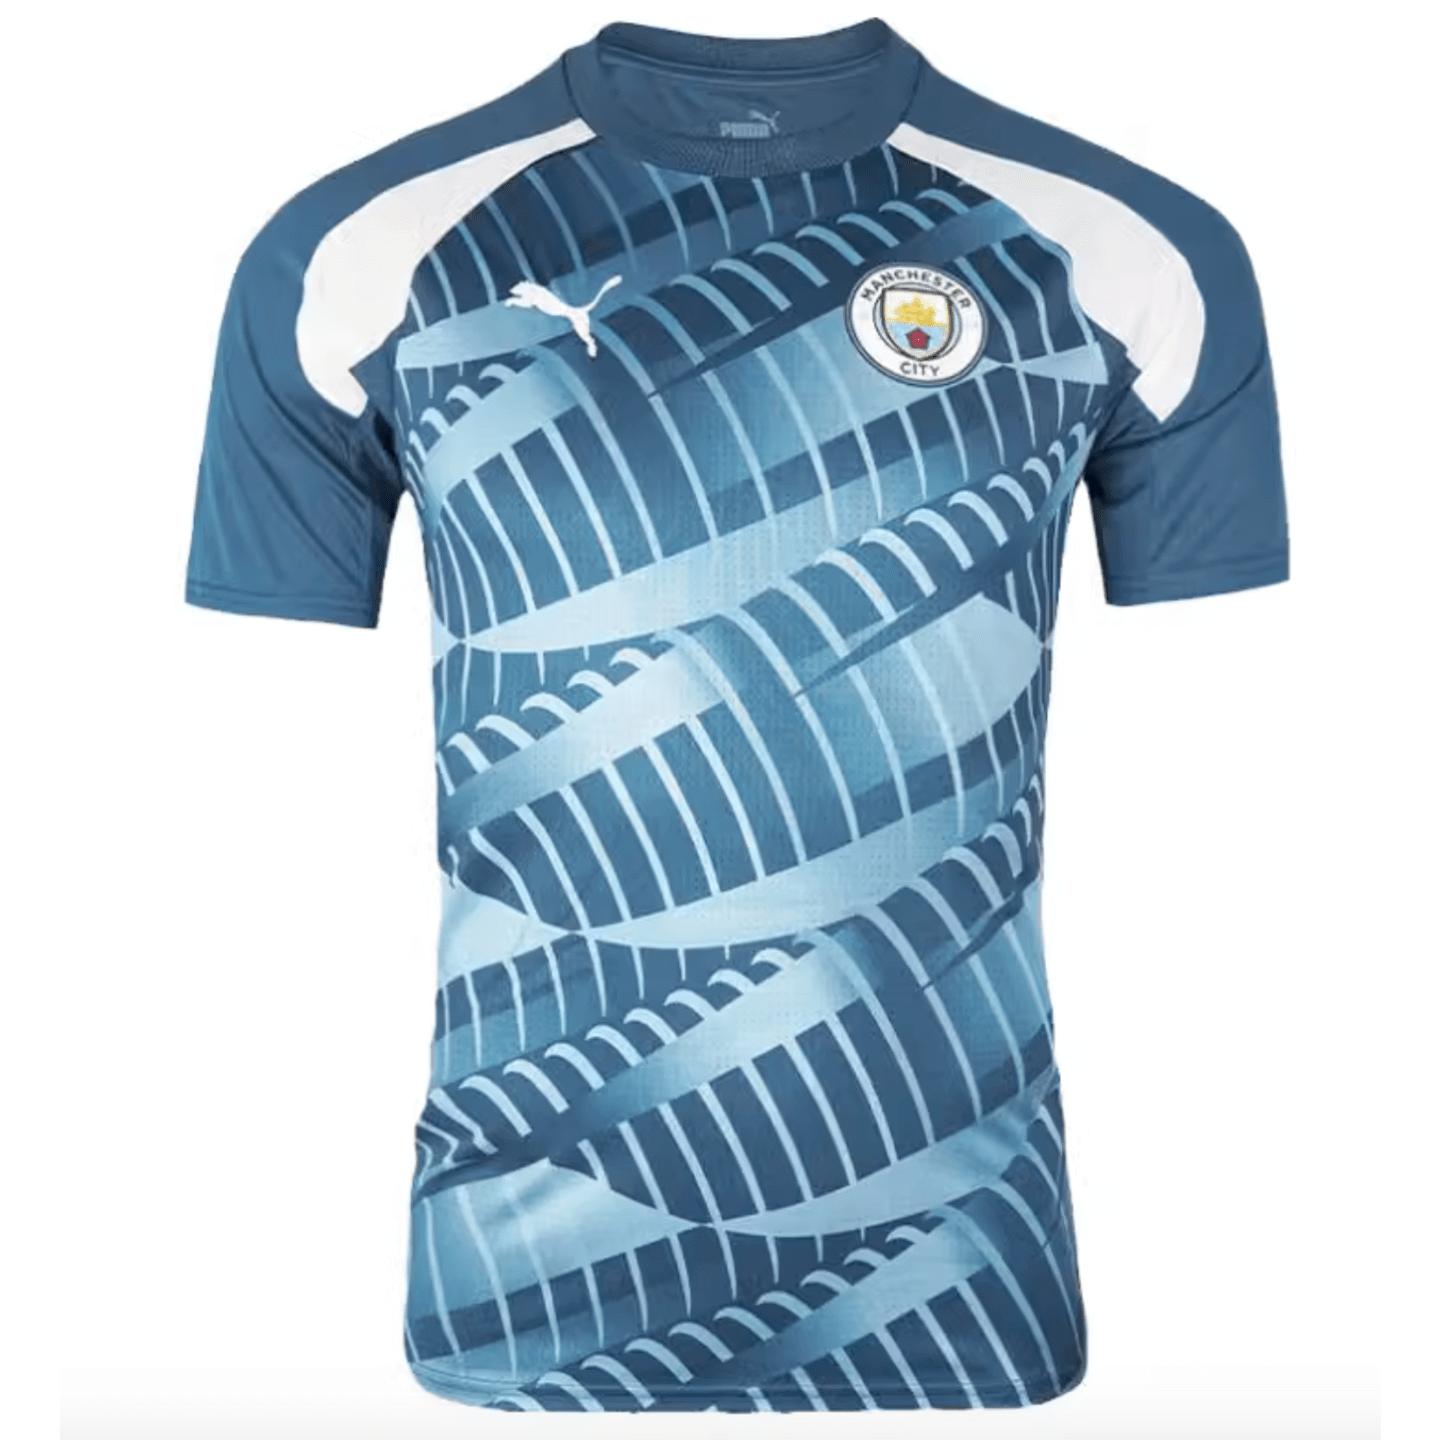 Camiseta prepartido del Manchester City de Puma